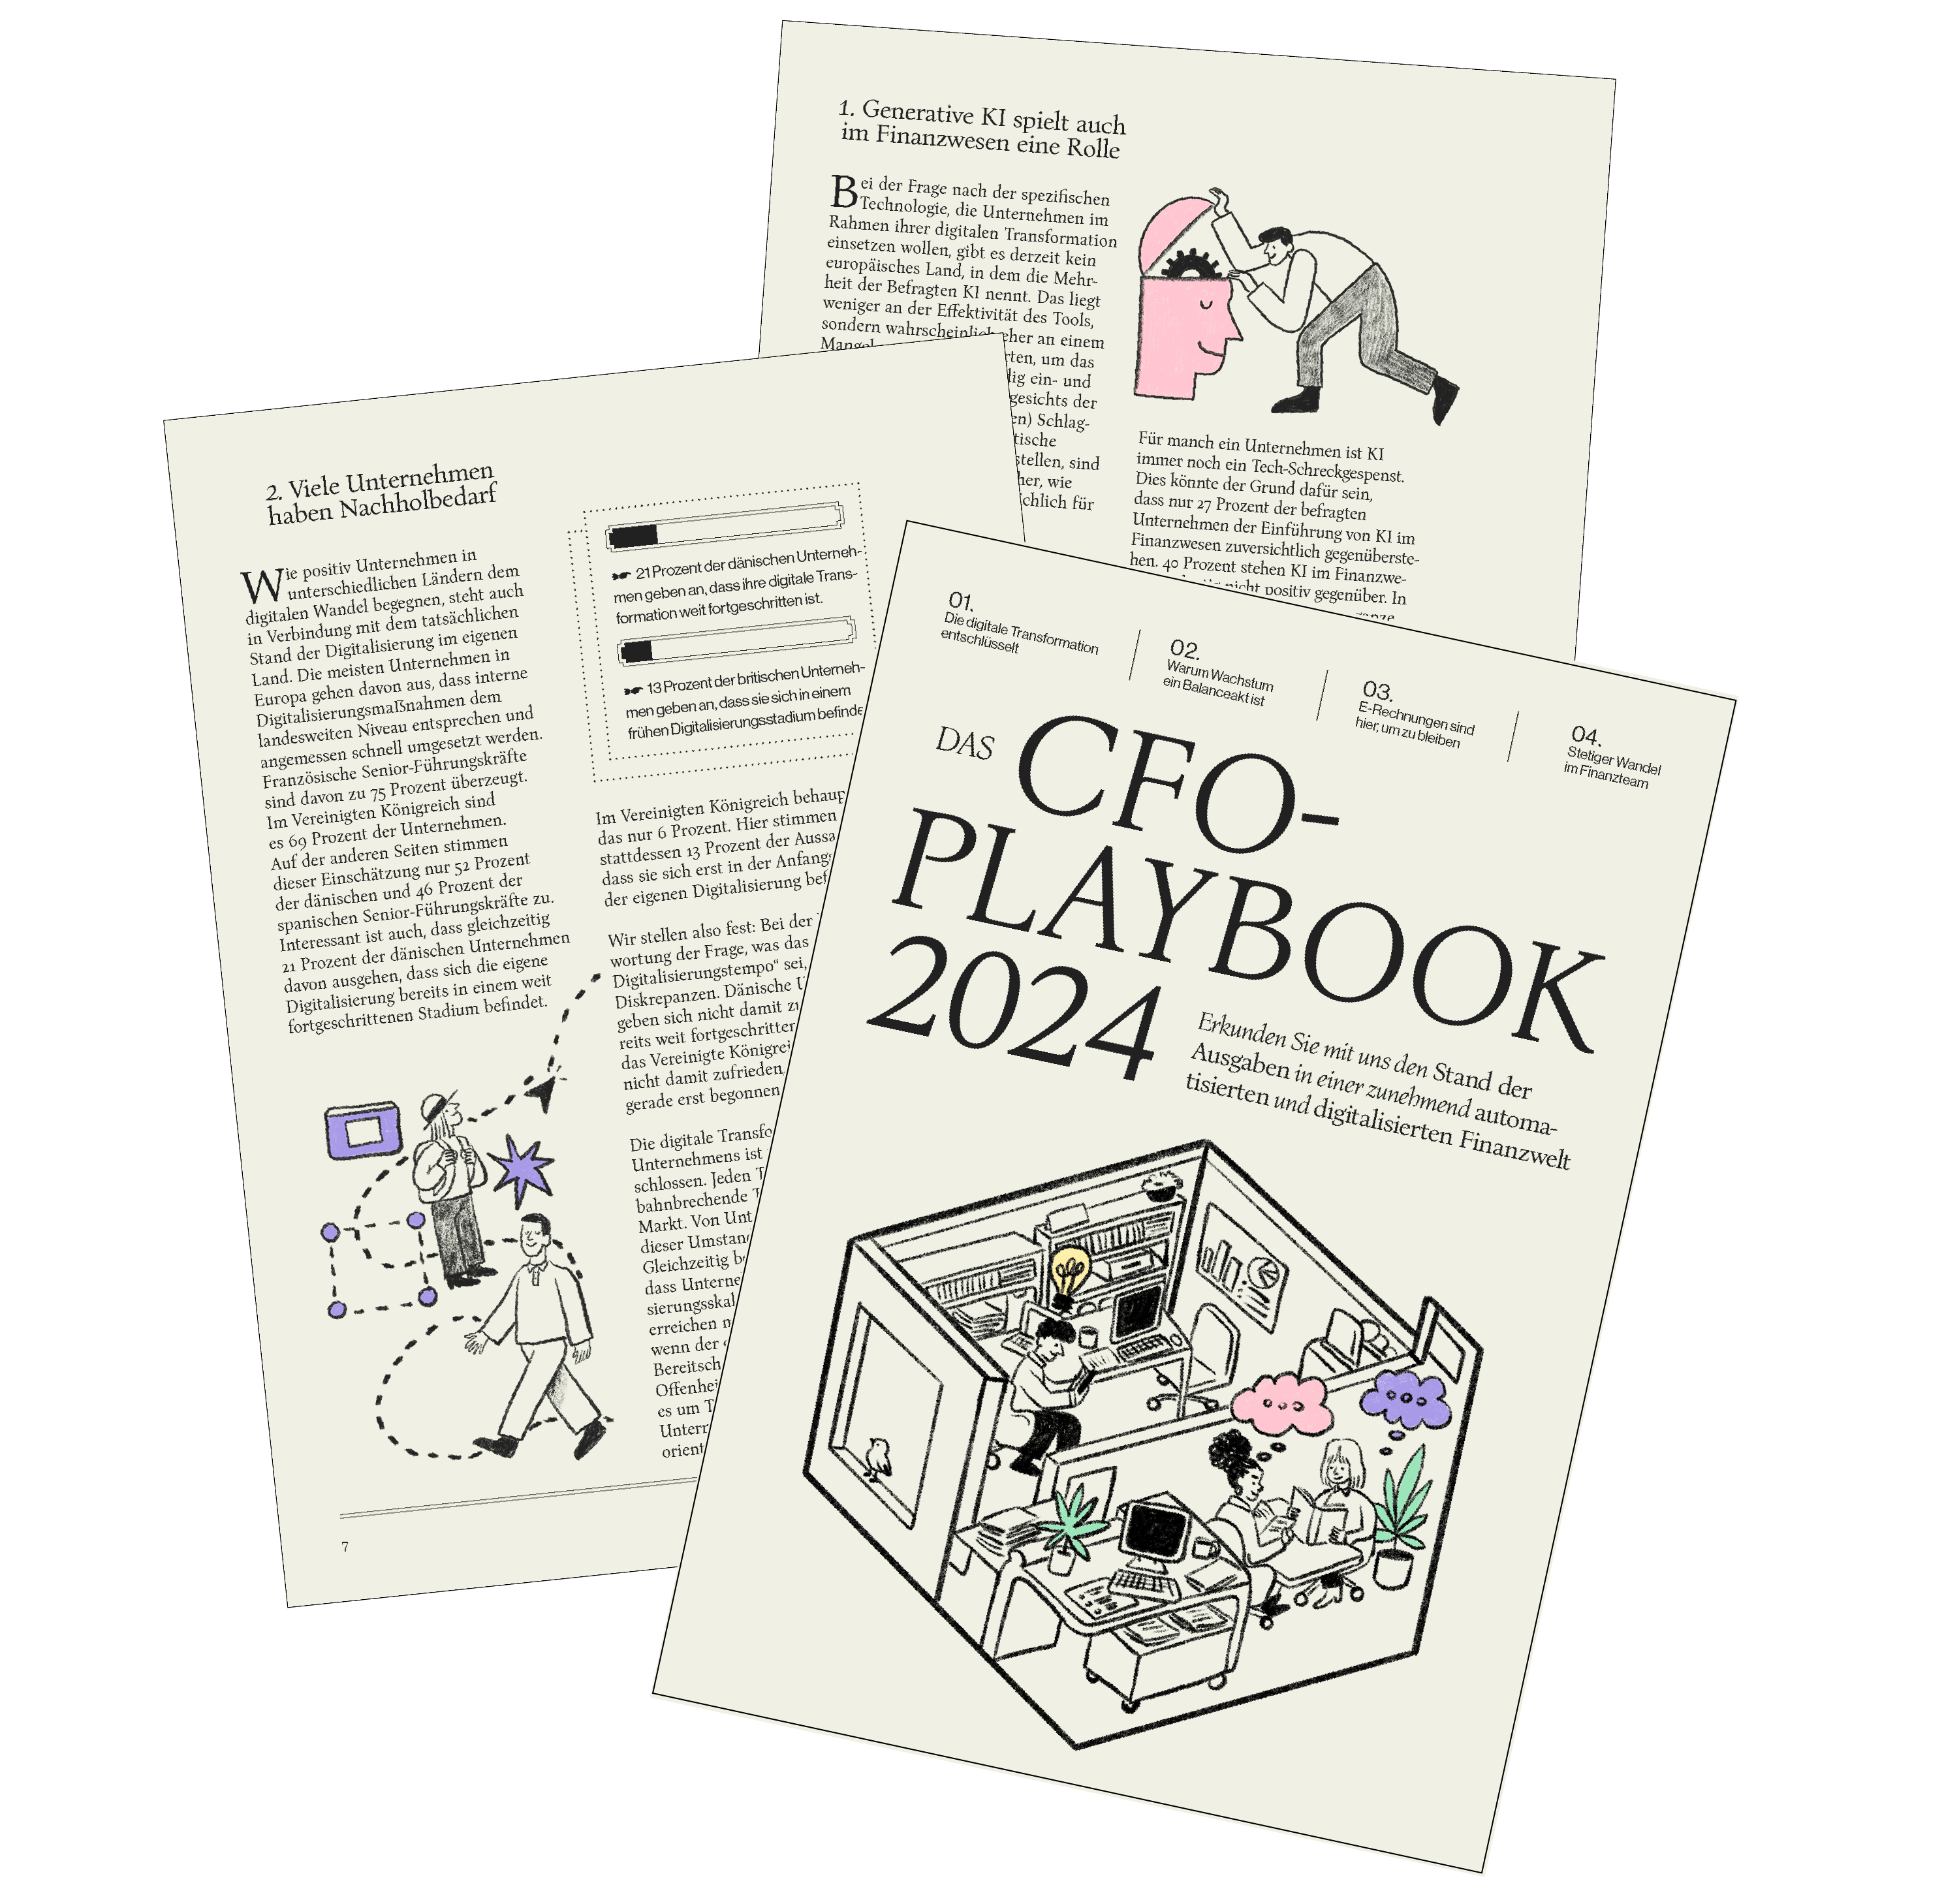 Das CFO-Playbook 2024